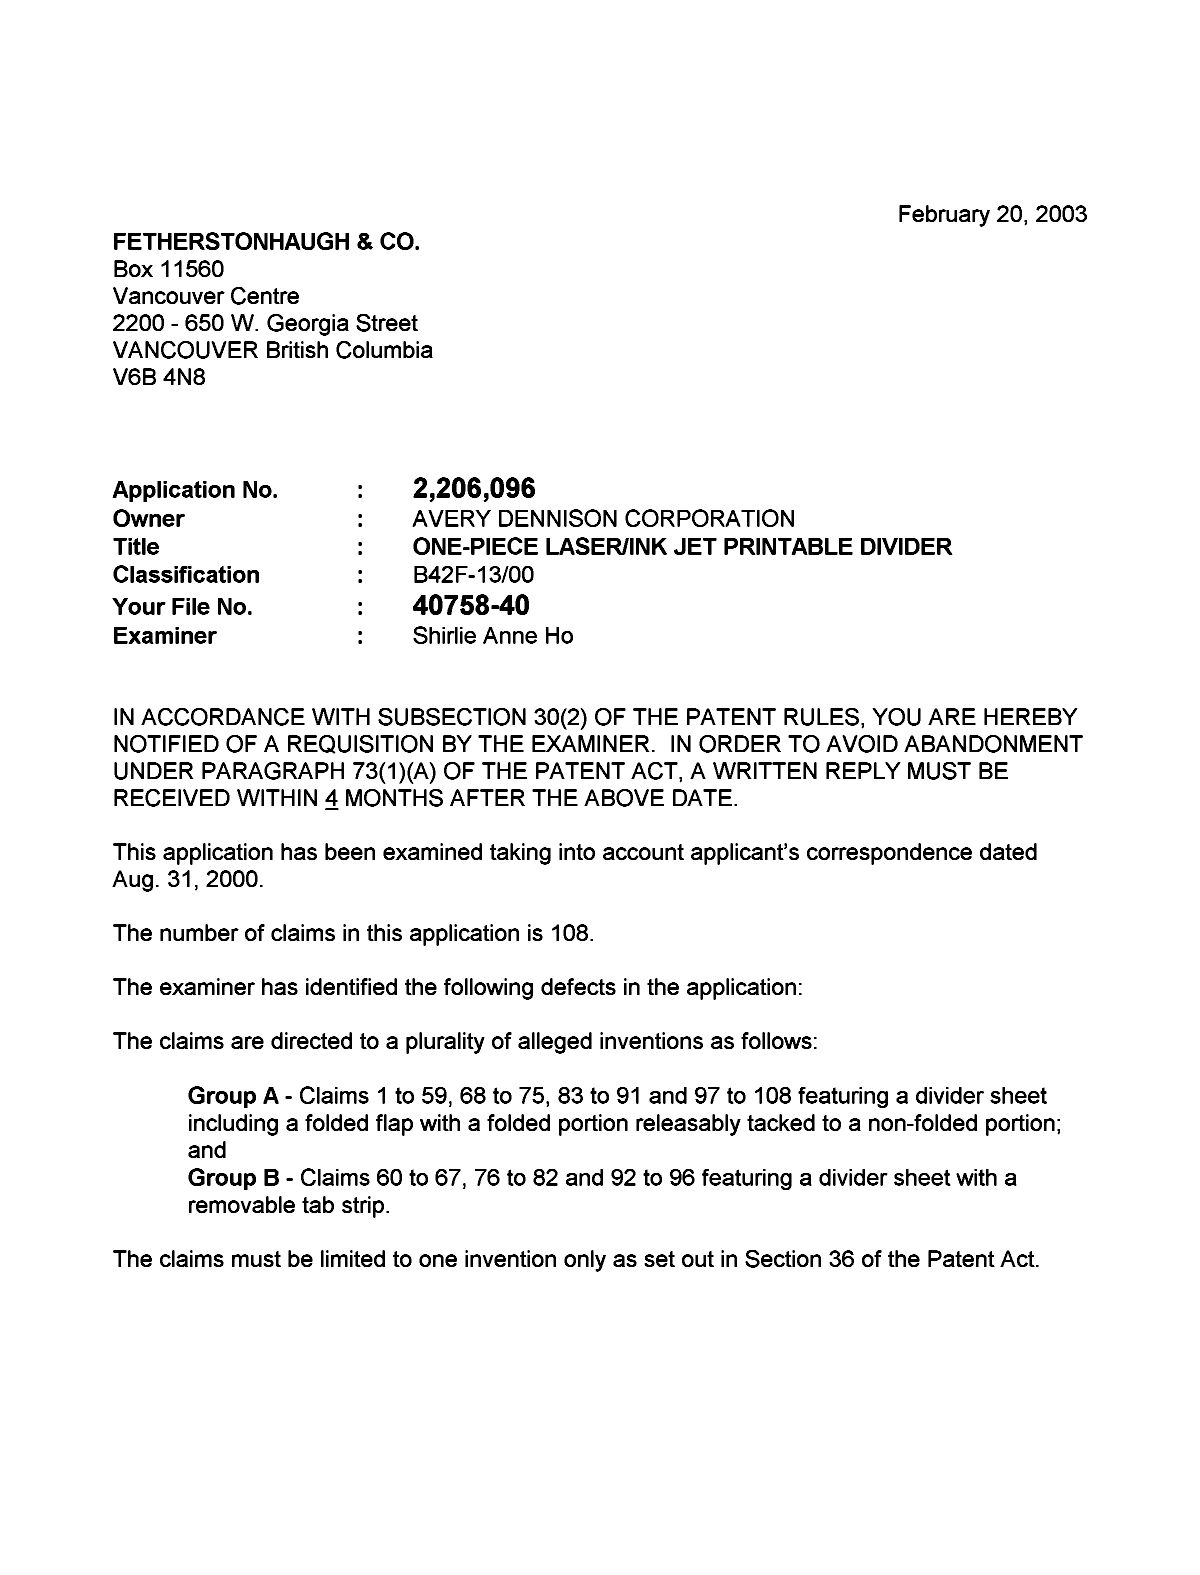 Canadian Patent Document 2206096. Prosecution-Amendment 20030220. Image 1 of 3